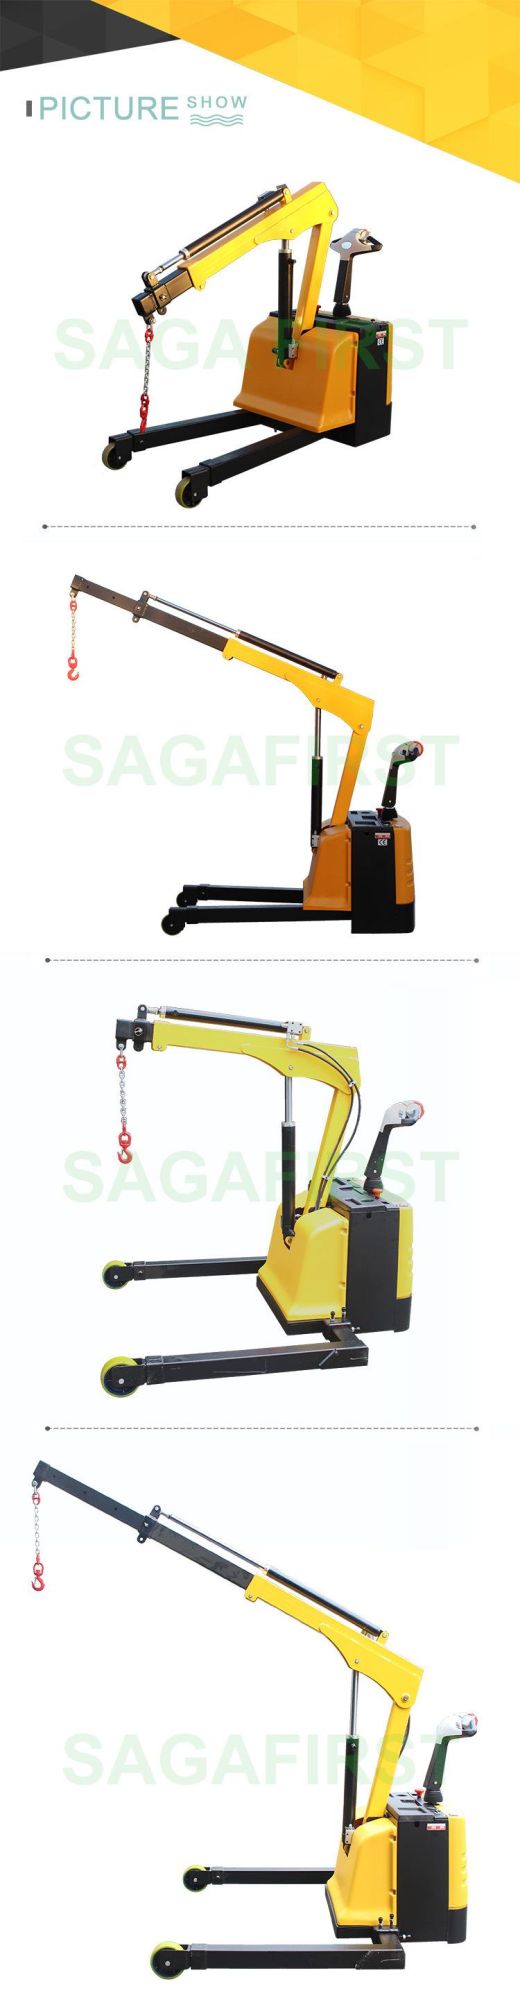 Affordable Price Mini Small Portable Lifting Crane Construction Lift Hoist